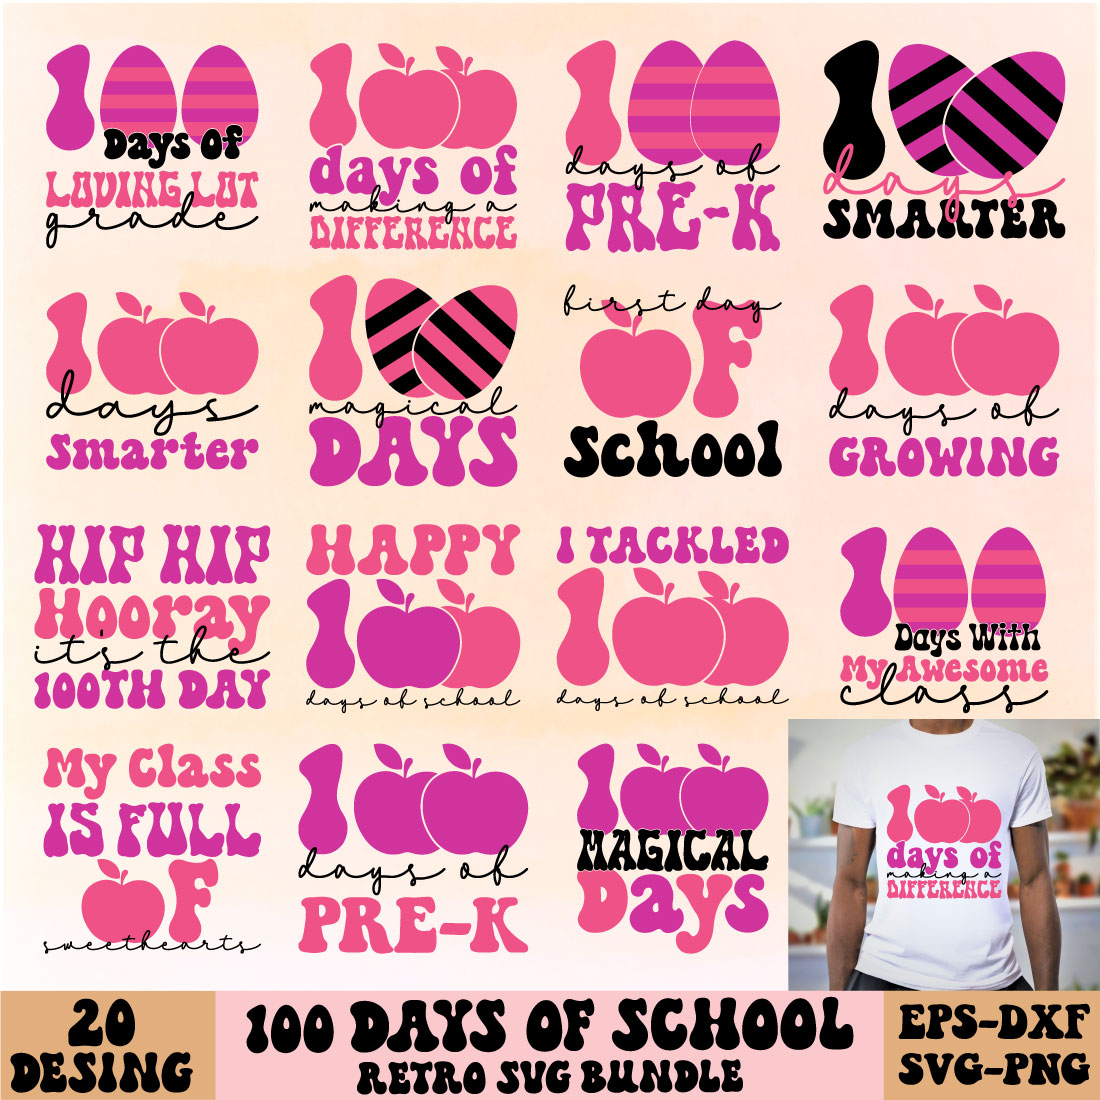 100 Days Of School Retro Svg Bundle cover image.